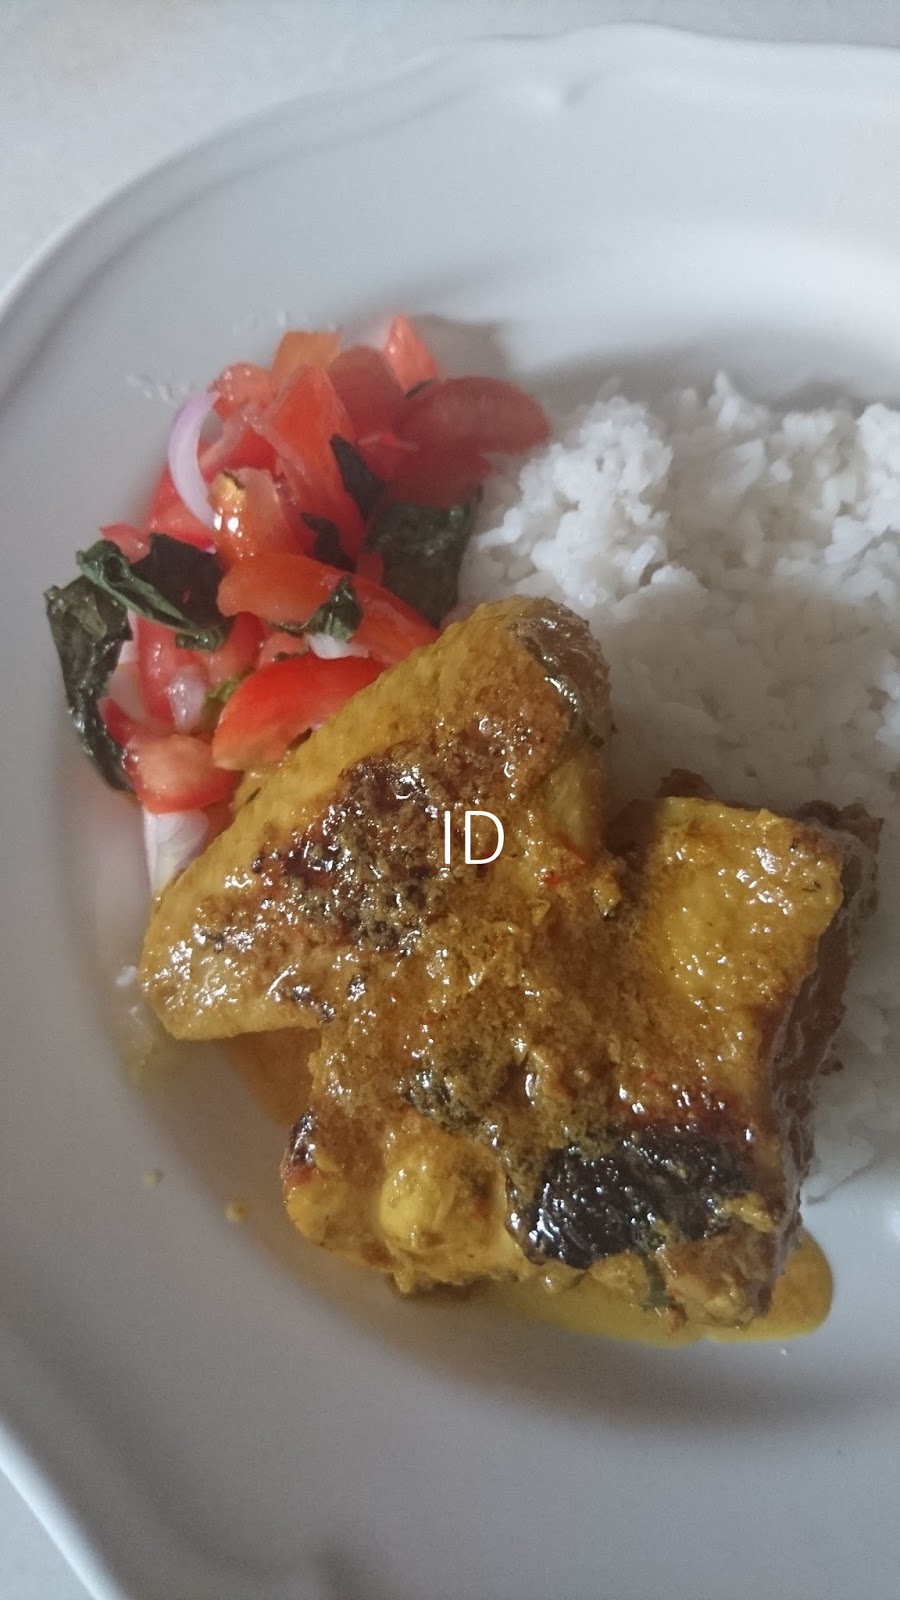 INTAI DAPUR: Ayam Percik Chef Wan